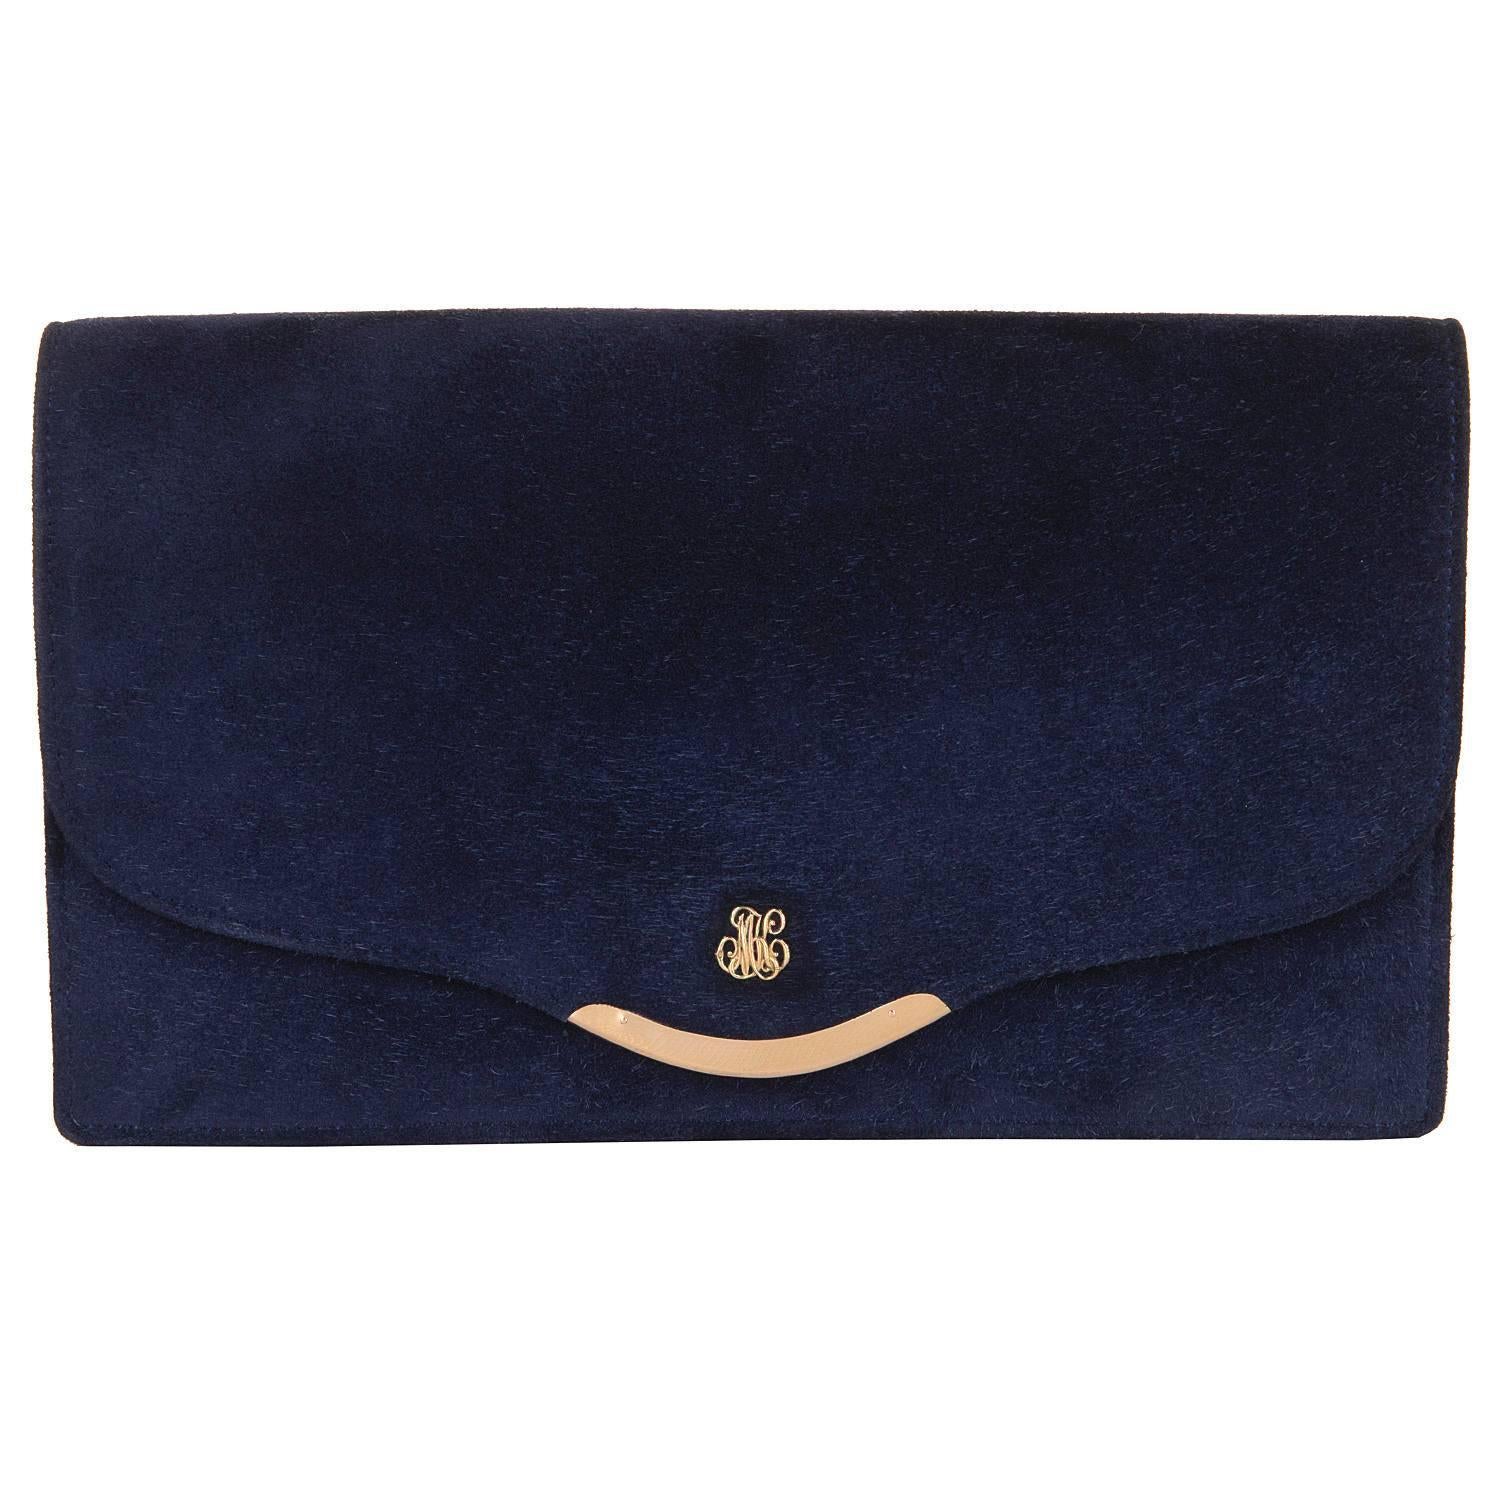 VERY RARE Vintage Hermes Royal Blue Suede Clutch Bag with18 carat Gold Hardware